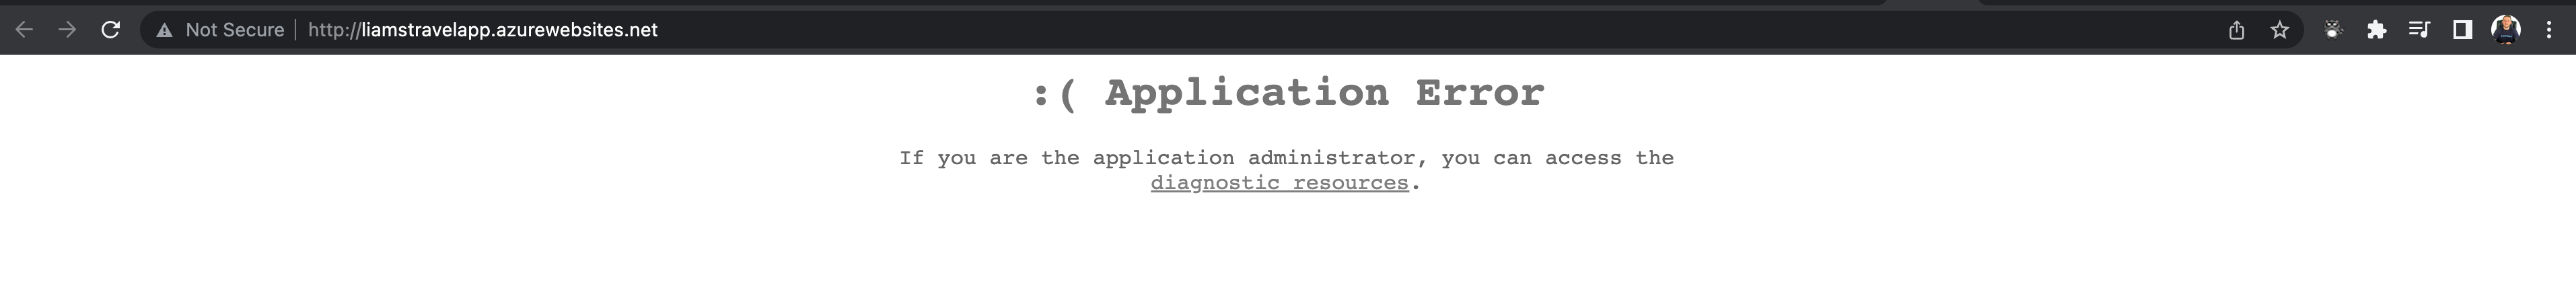 application error